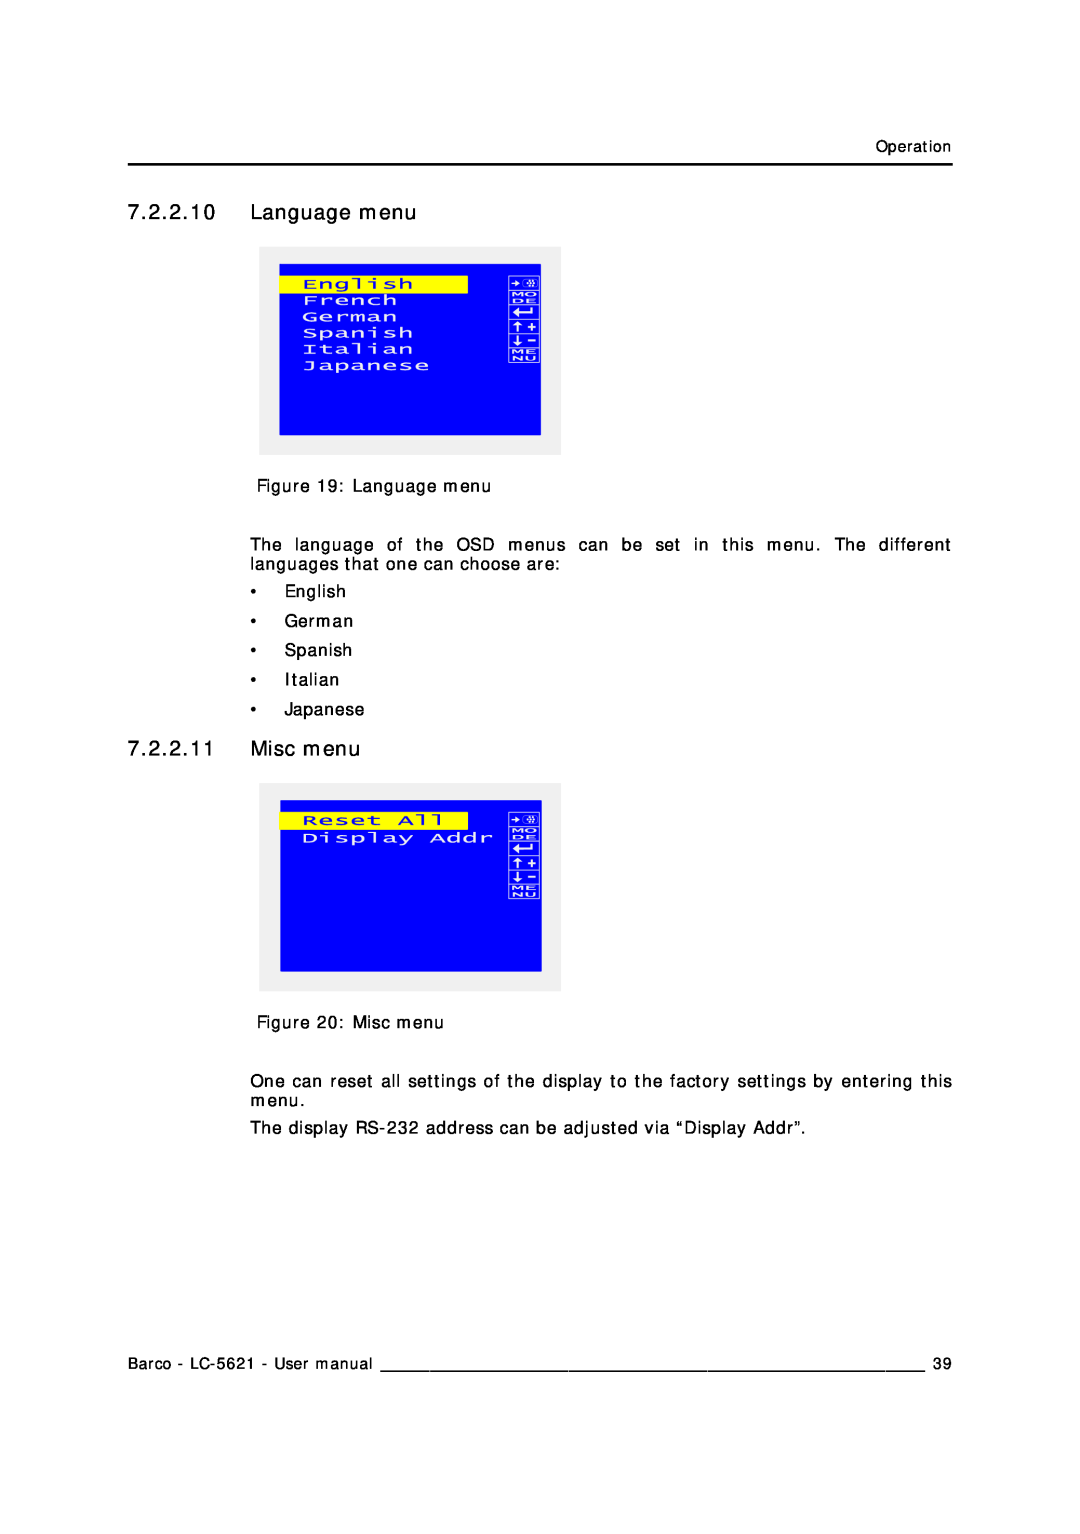 Barco LC-5621 user manual Language menu, Misc menu 